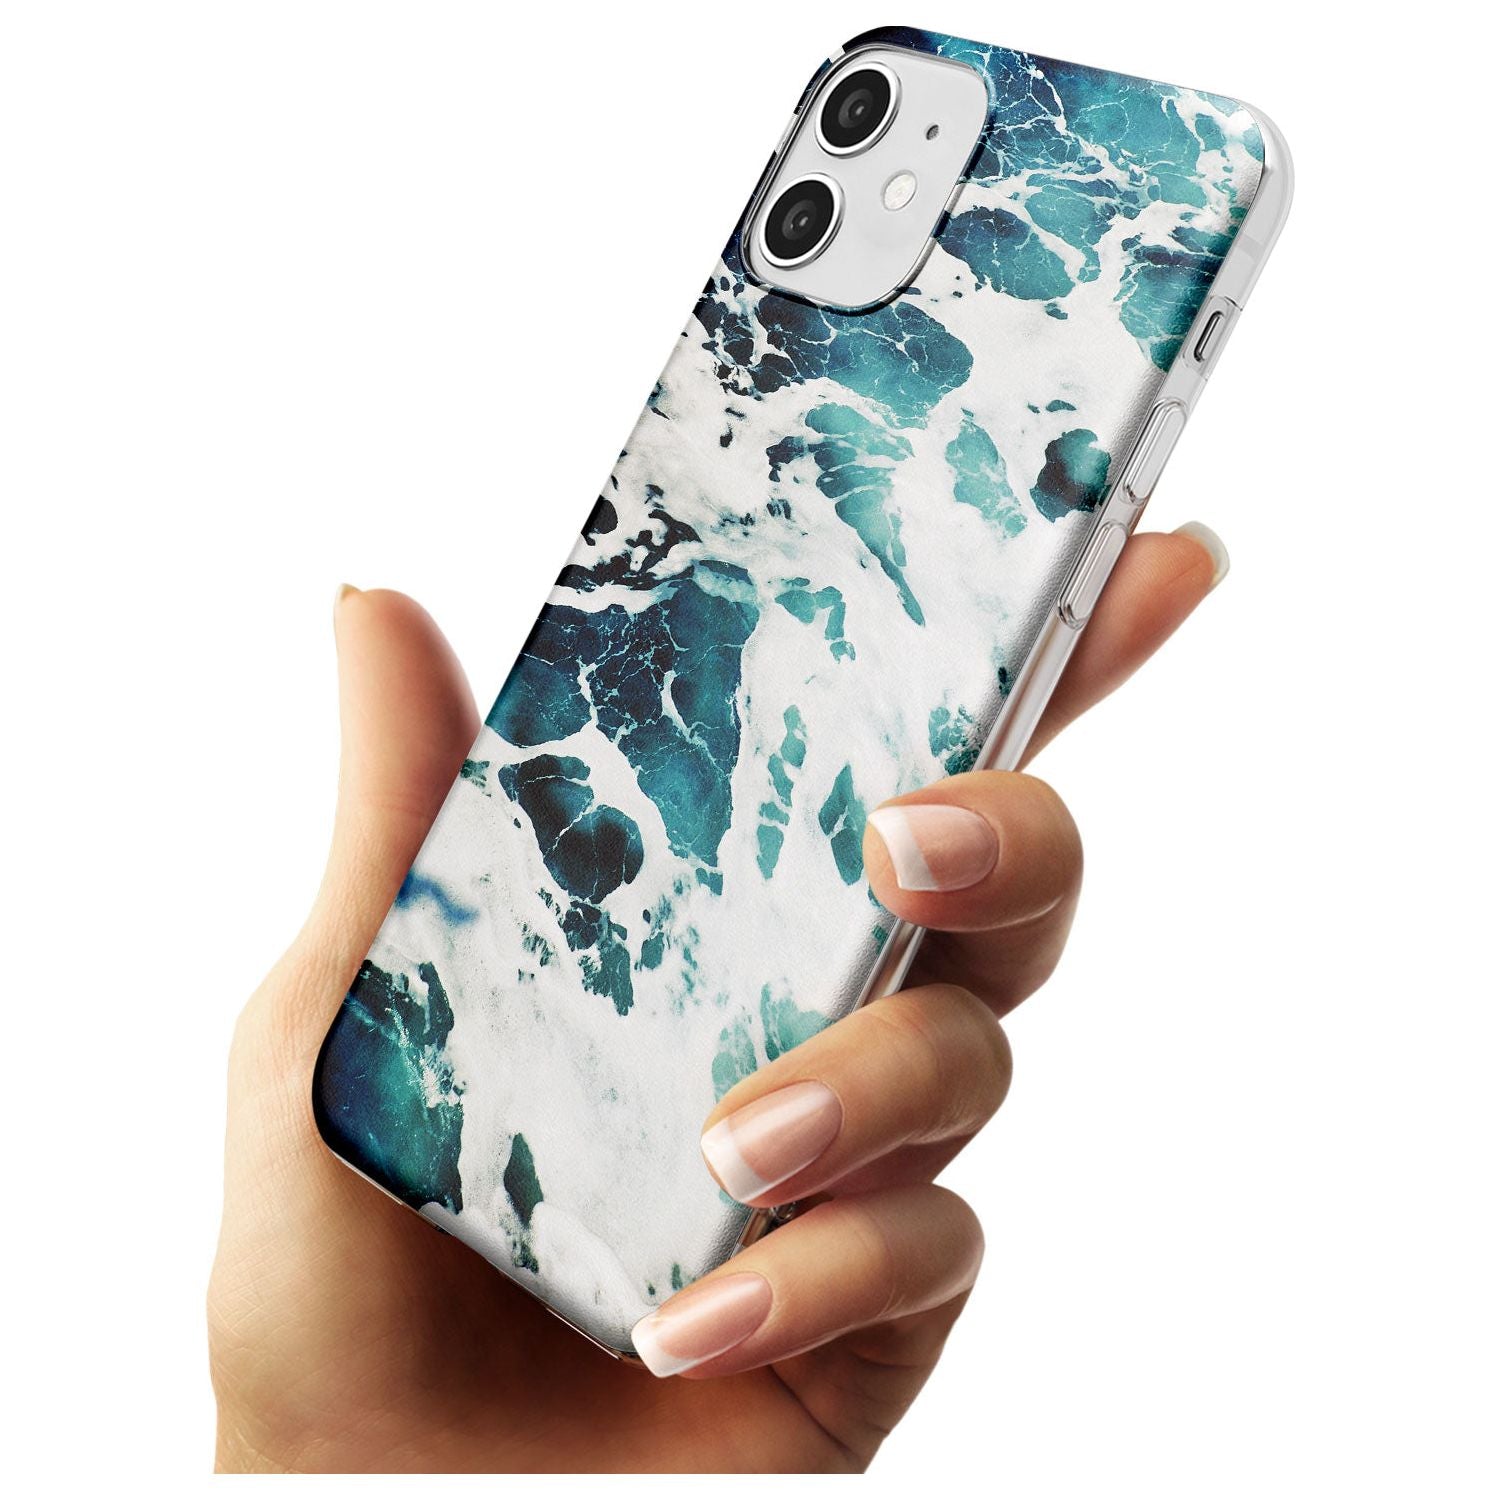 Ocean Waves Photograph Slim TPU Phone Case for iPhone 11